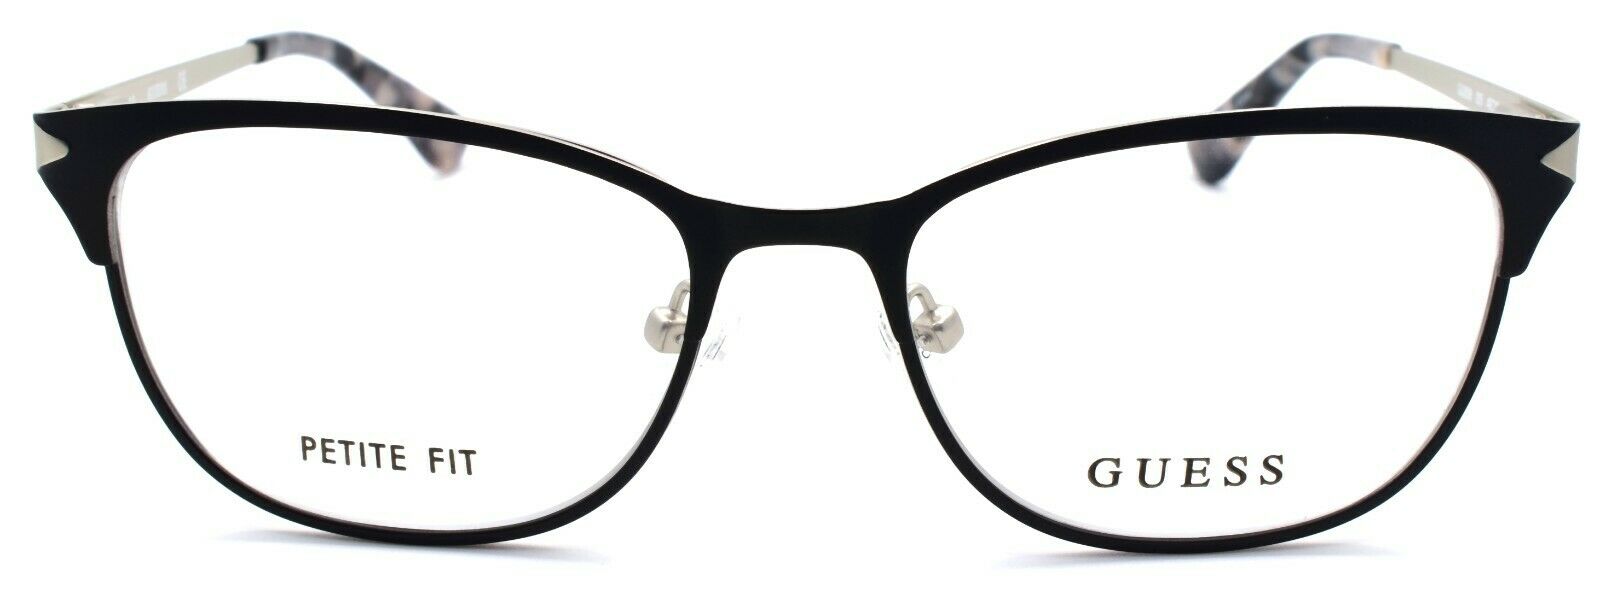 2-GUESS GU2638 005 Women's Eyeglasses Frames Petite 49-16-135 Matte Black / Nickel-664689919512-IKSpecs